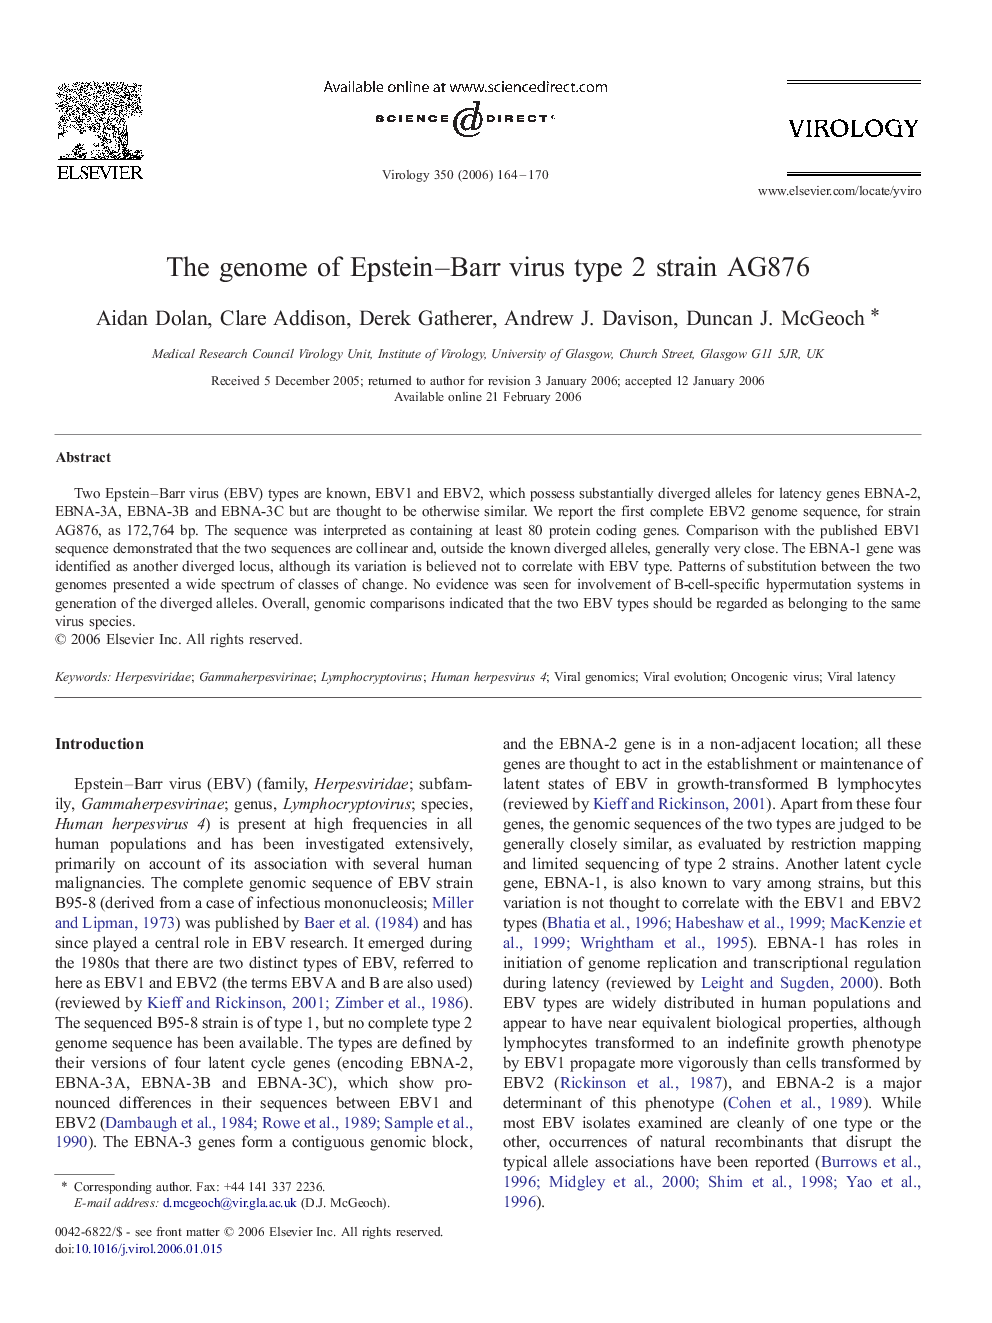 The genome of Epstein–Barr virus type 2 strain AG876